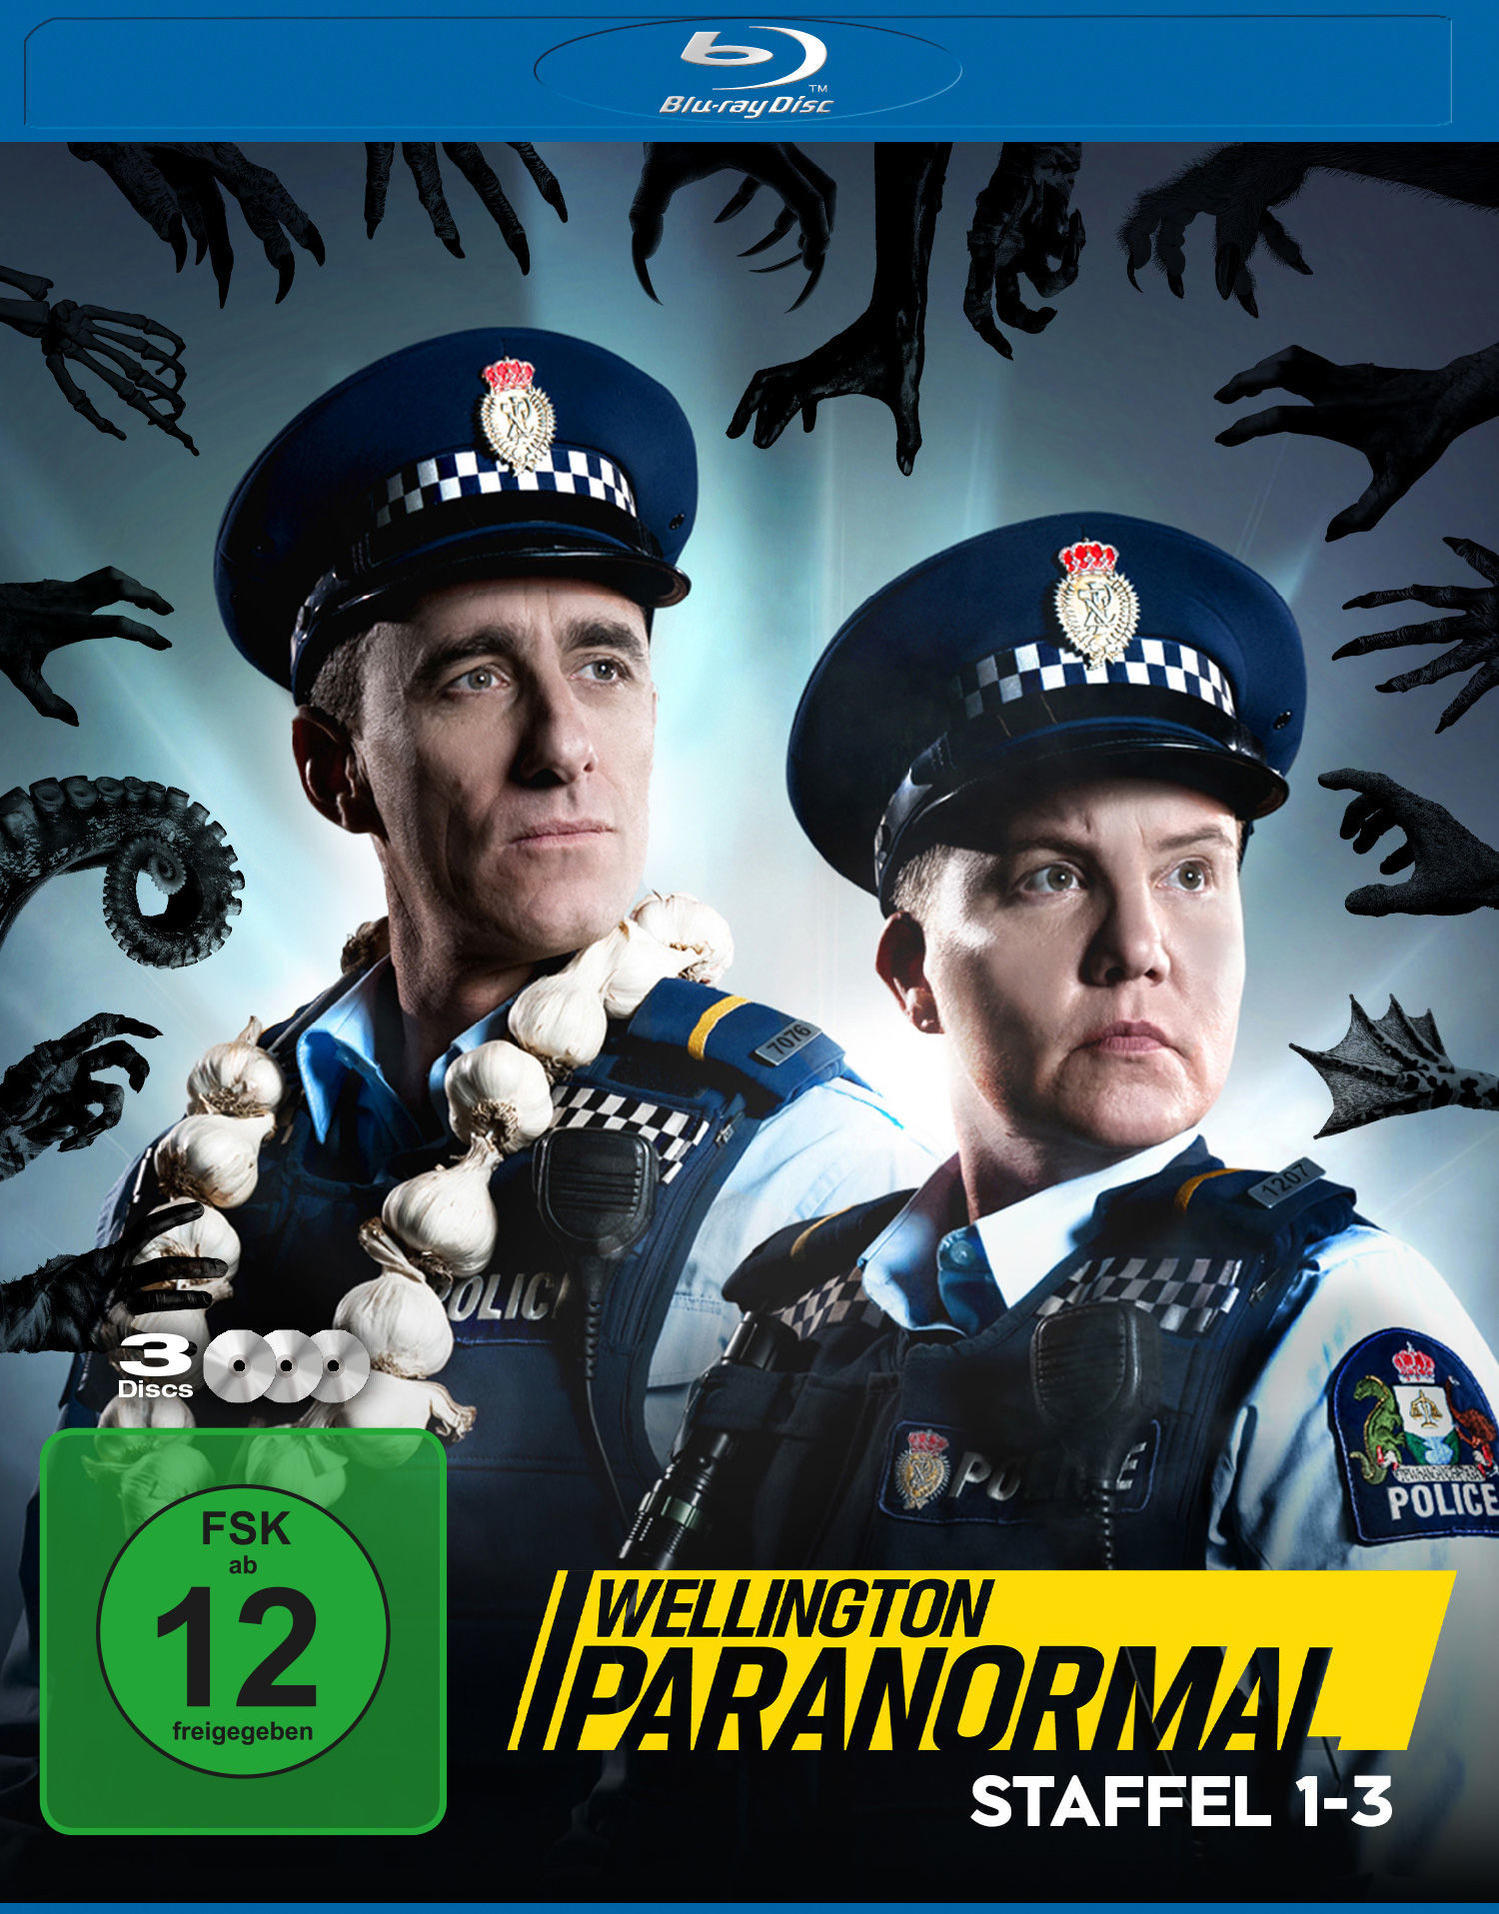 1-3 Wellington Blu-ray Paranormal - Staffel